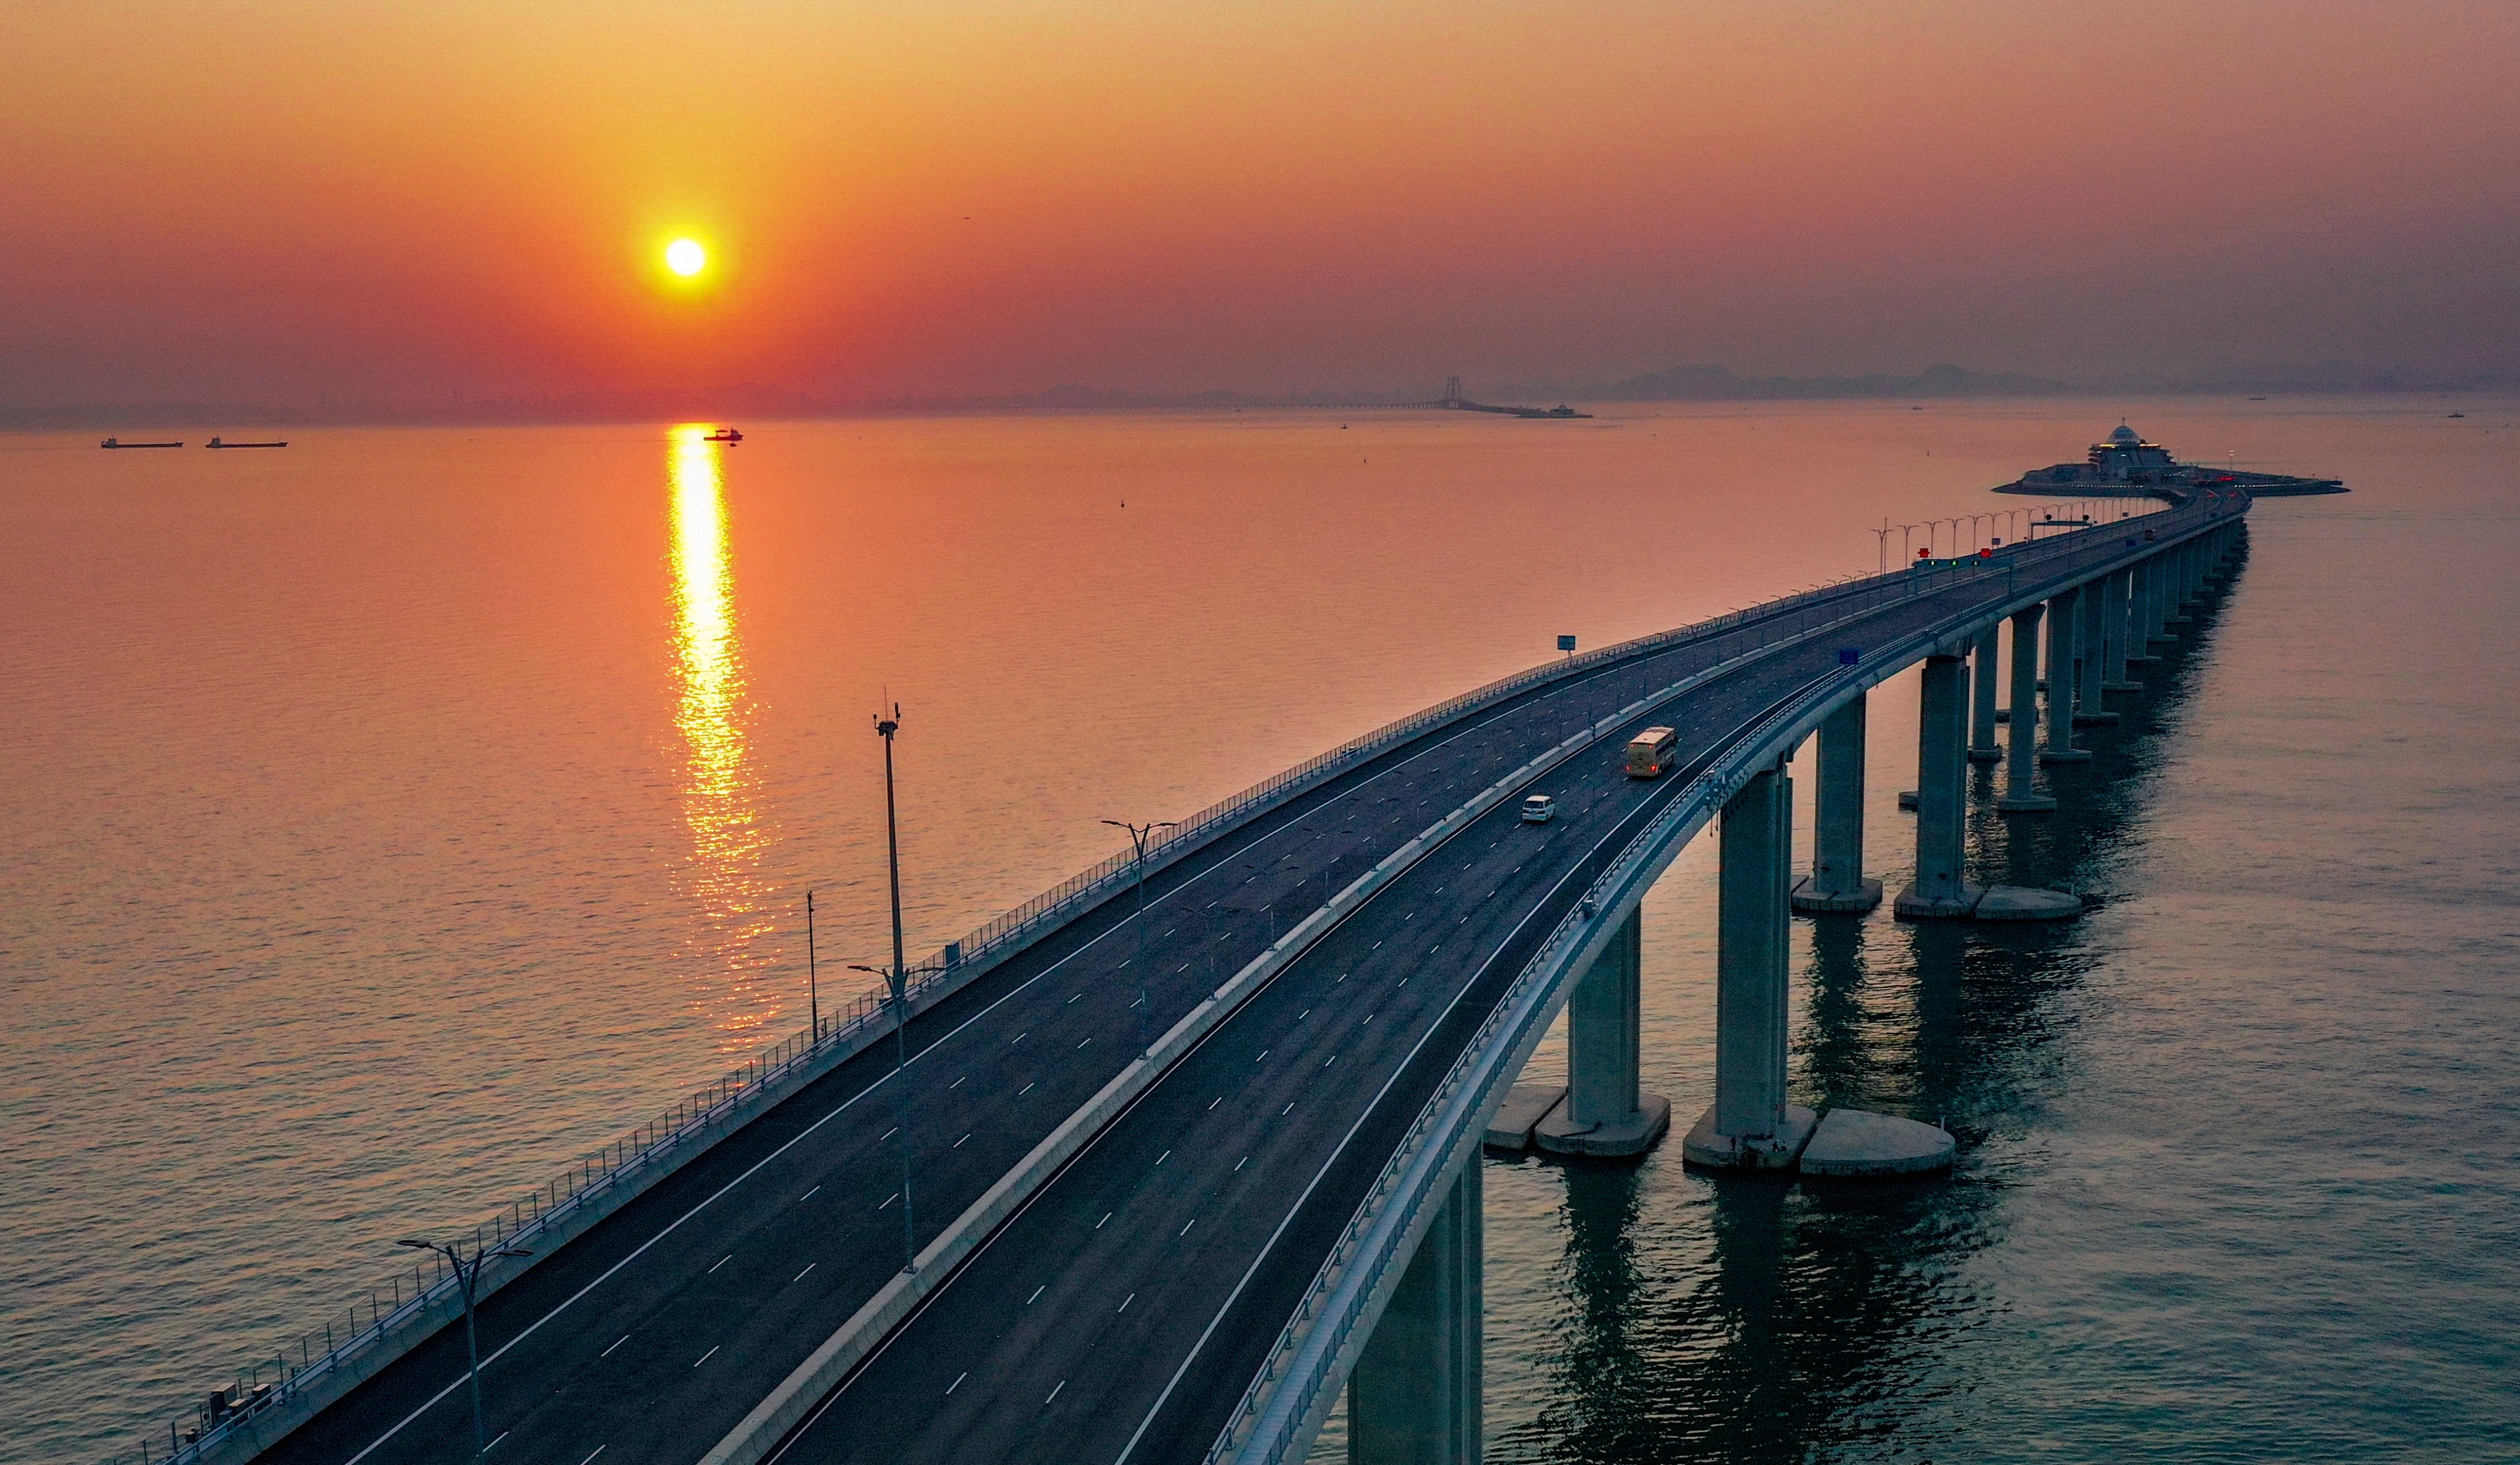 The Hong Kong-Zhuhai-Macau Bridge is the world’s longest sea crossing. Photo: Winson Wong